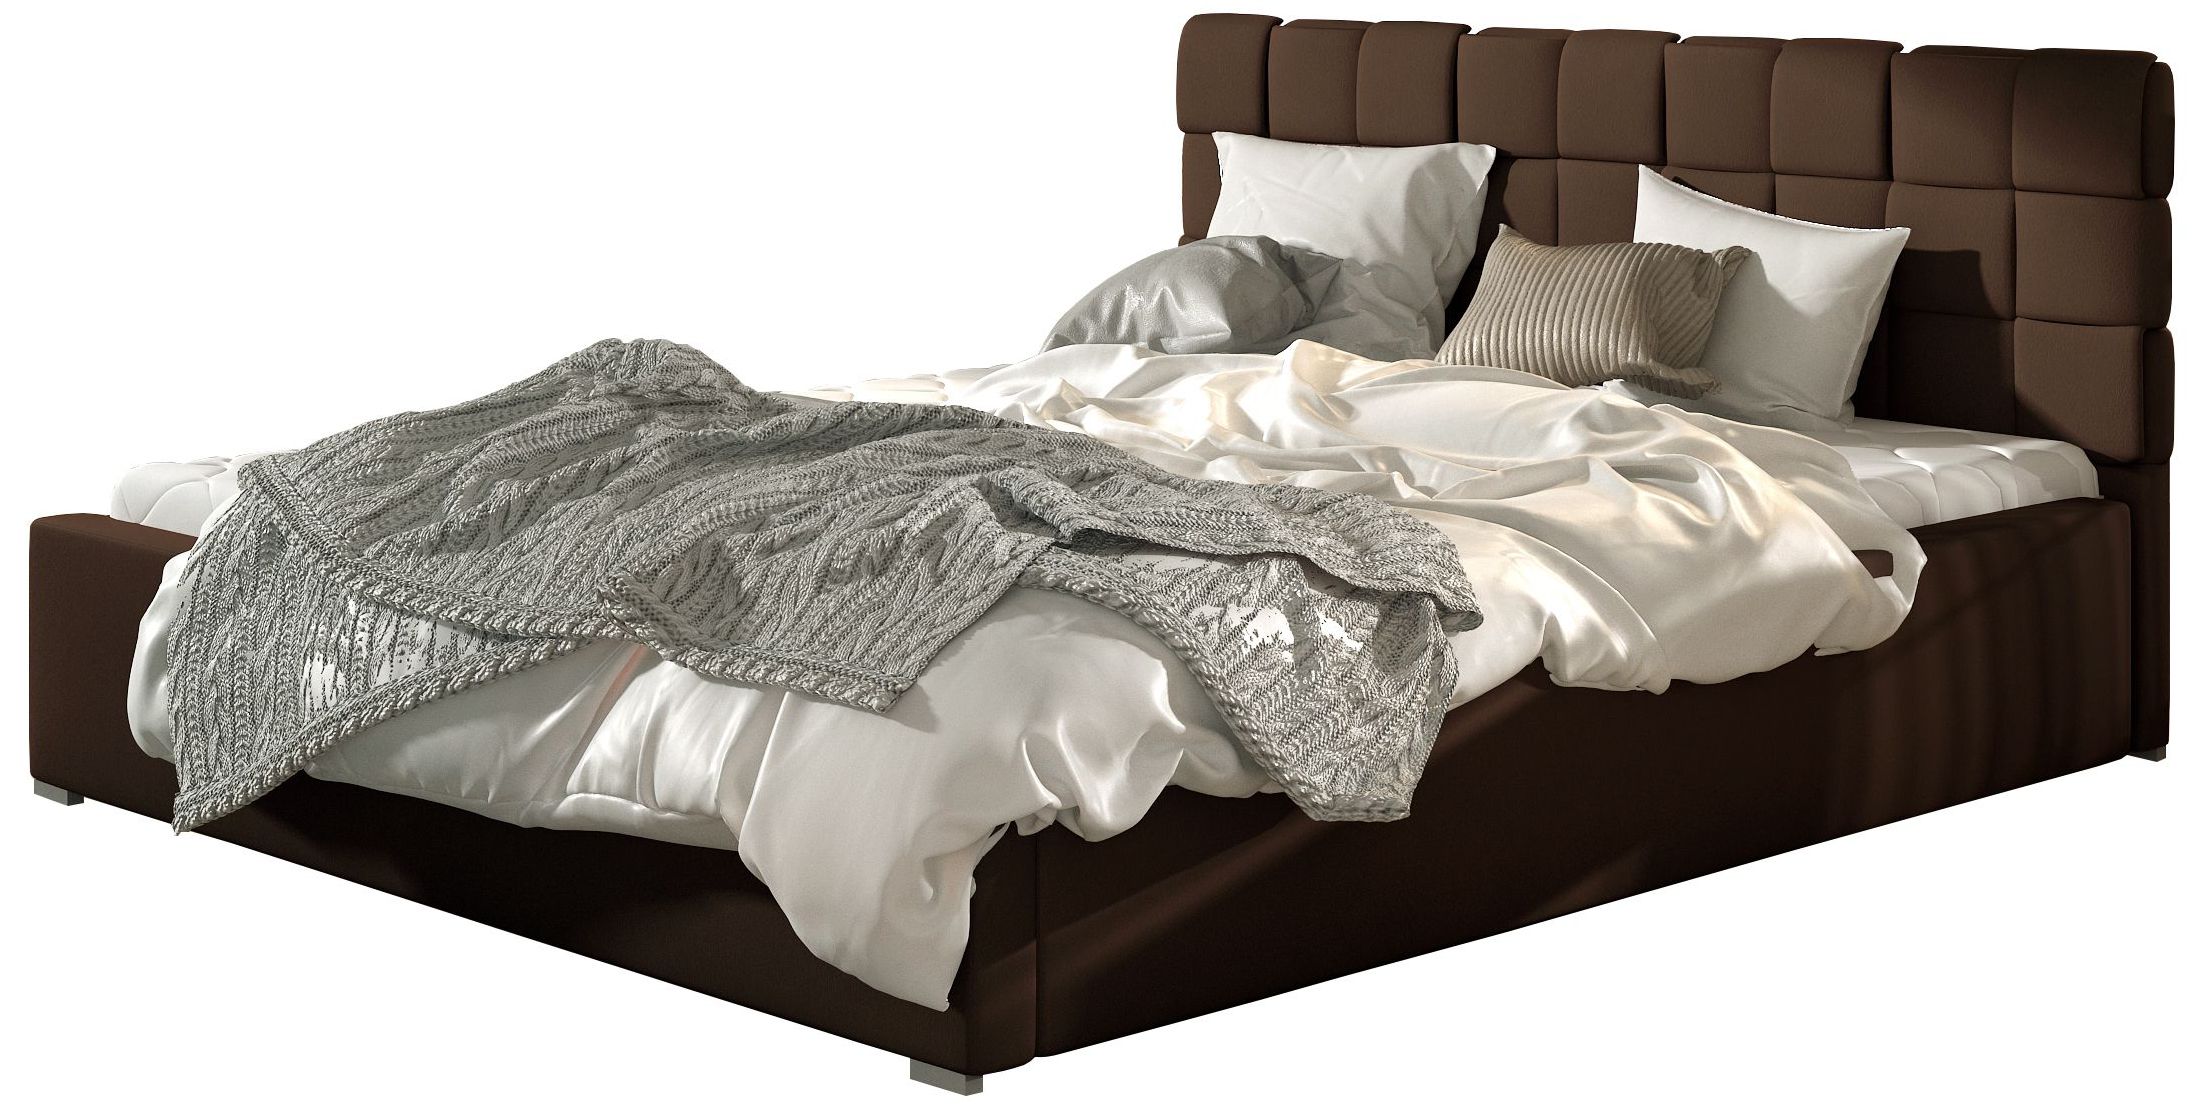 PoliHome Επενδυμένο κρεβάτι Grady-160 x 200-Με μηχανισμό ανύψωσης-Kafe